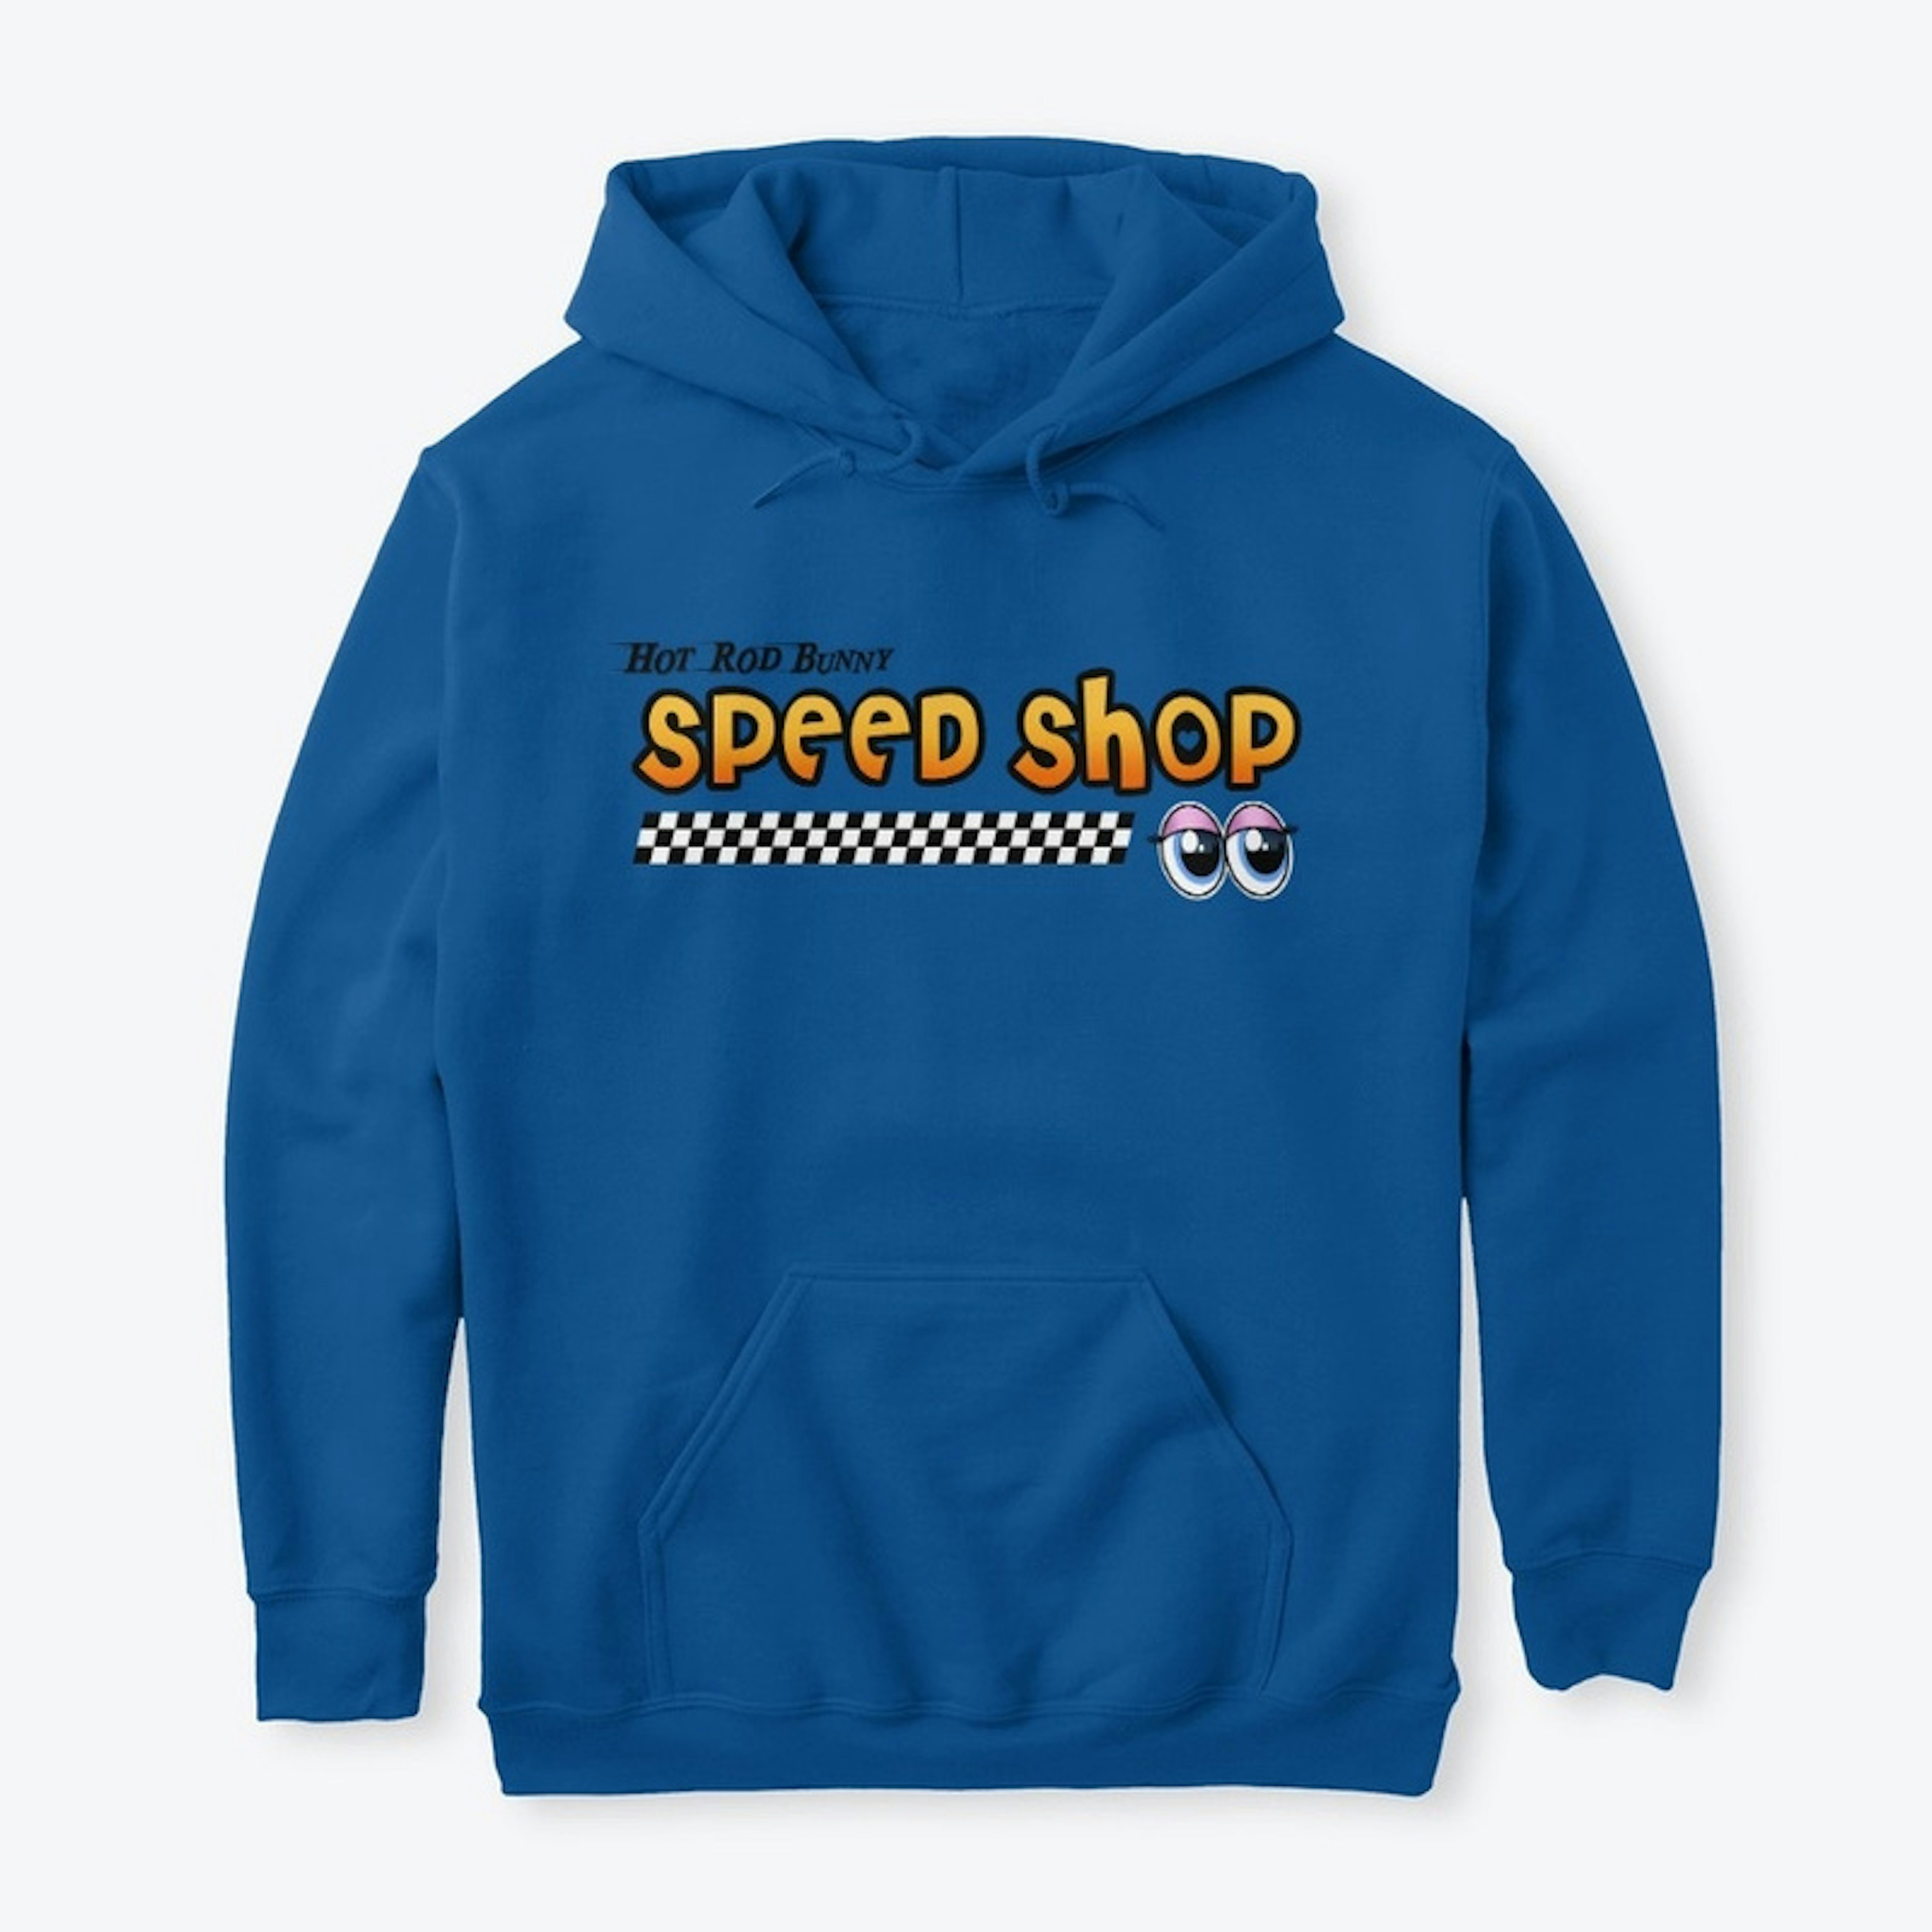 Hot Rod Bunny Speed Shop